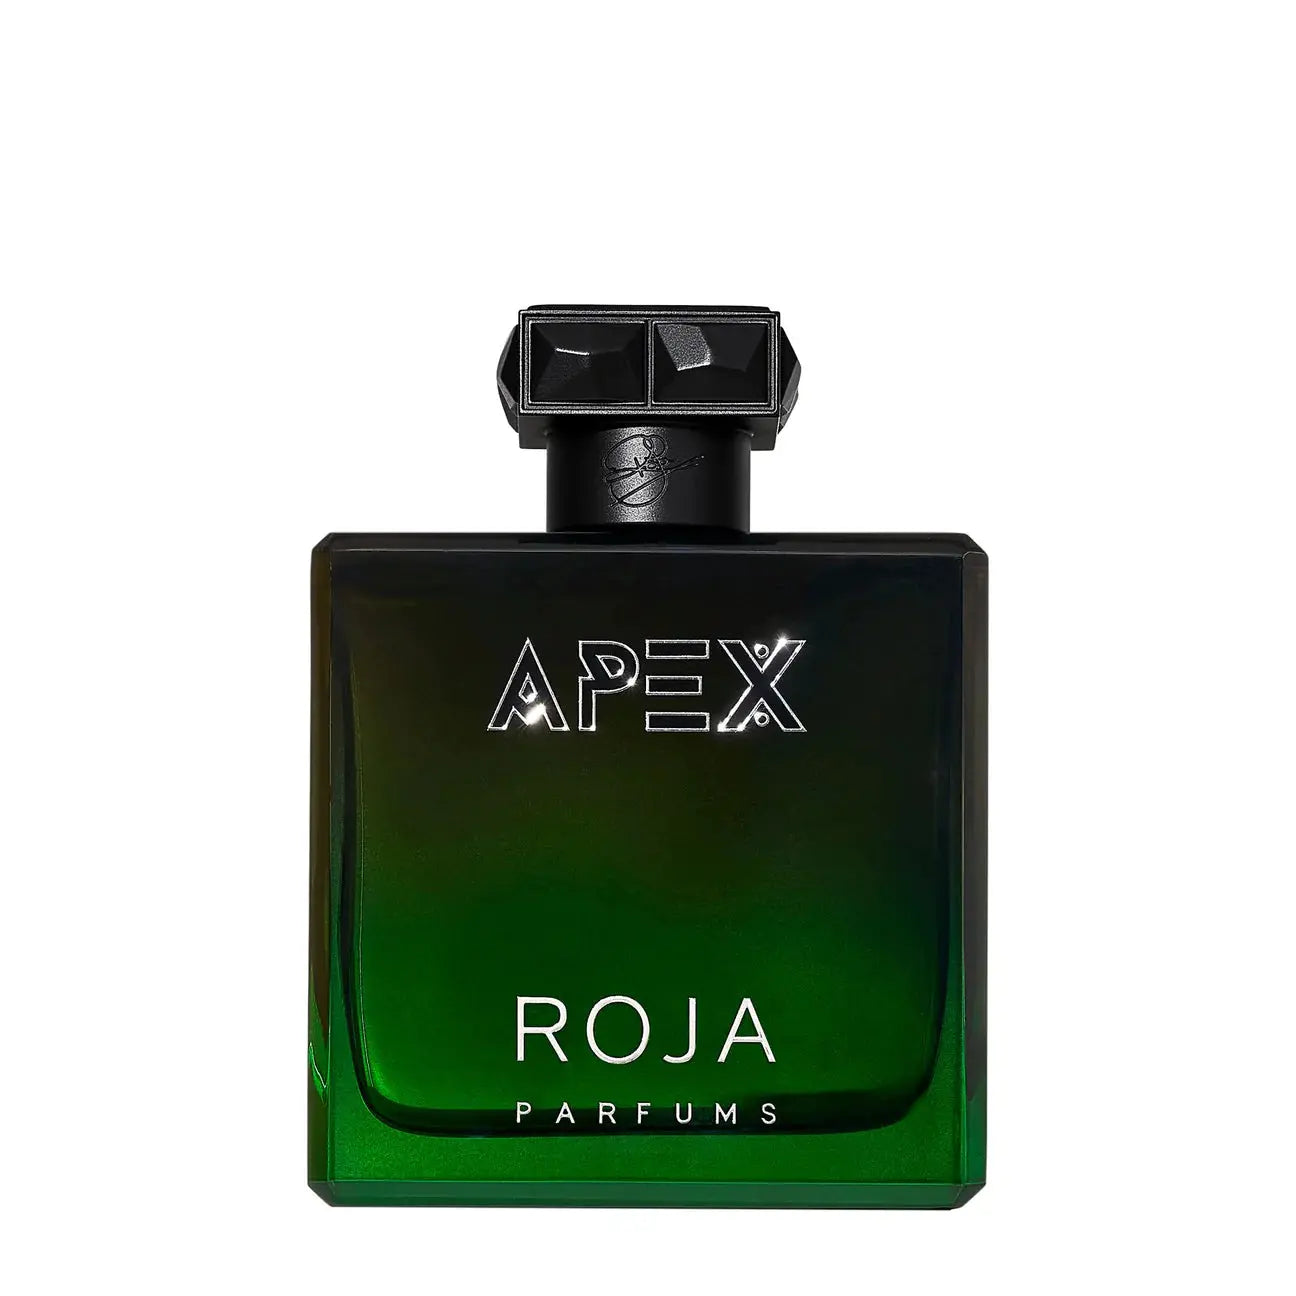 Apex eau de parfum Roja - 100 ml